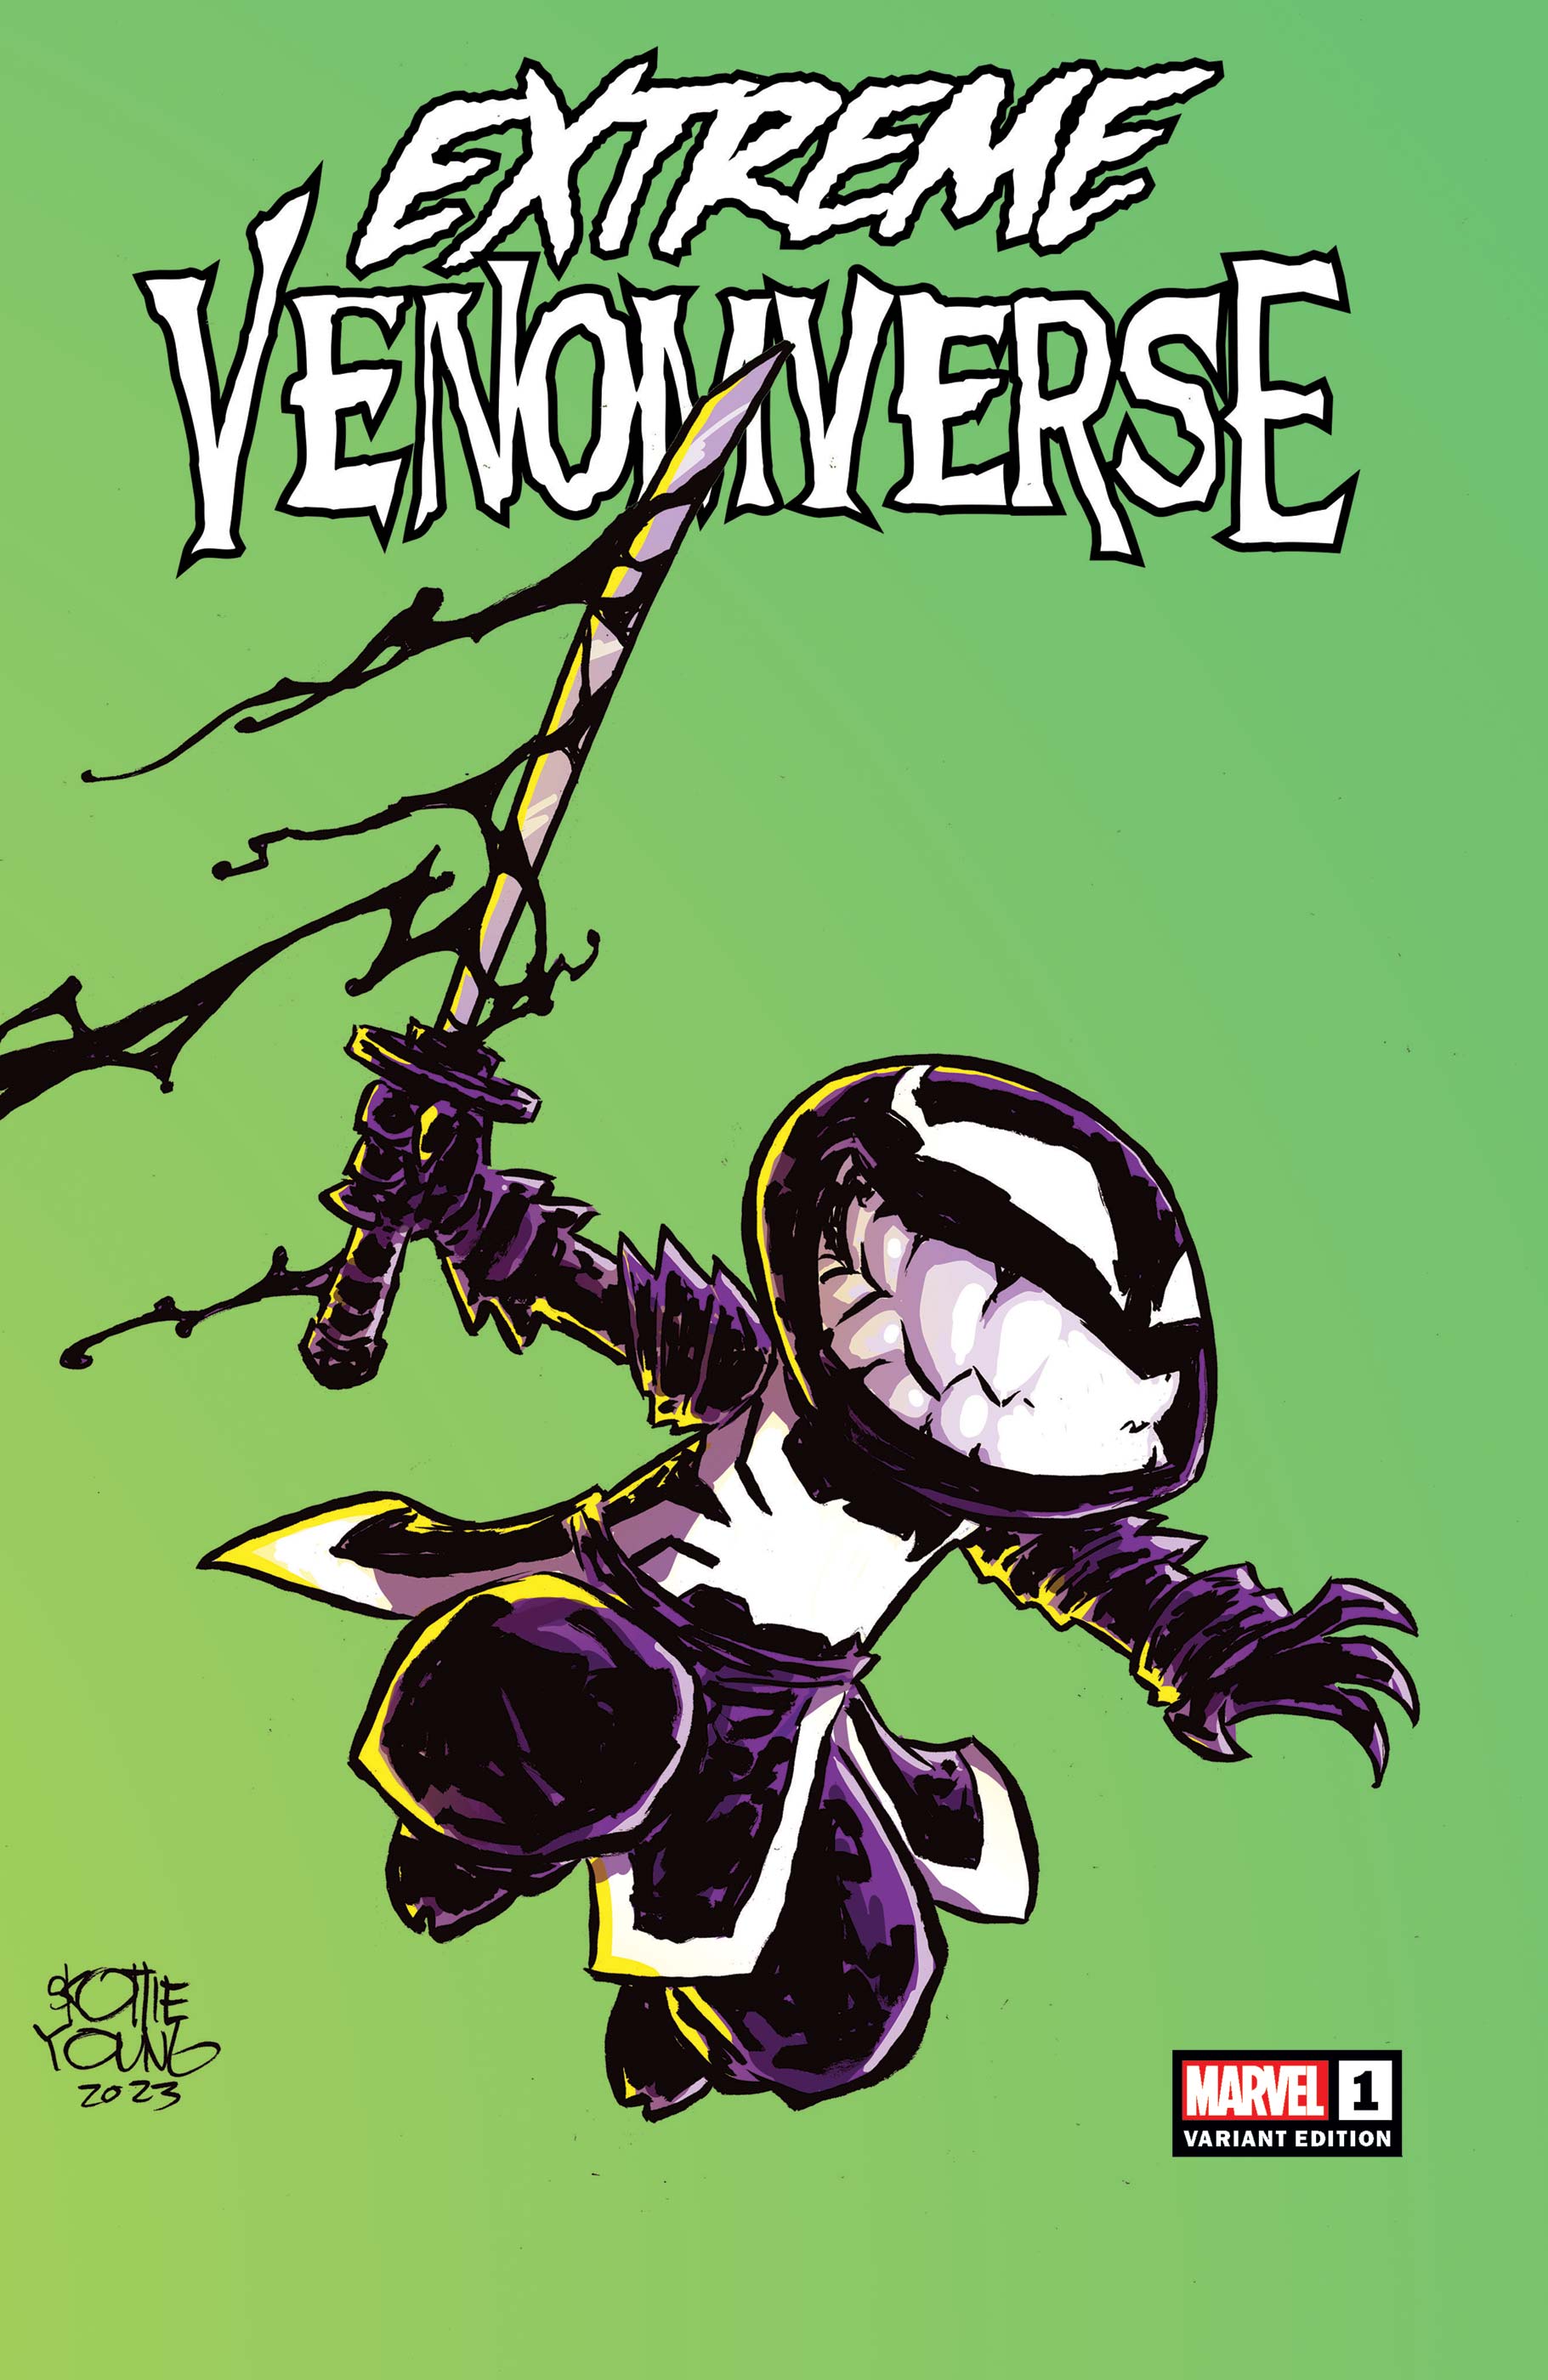 Extreme Venomverse (2023) #1 (Variant)